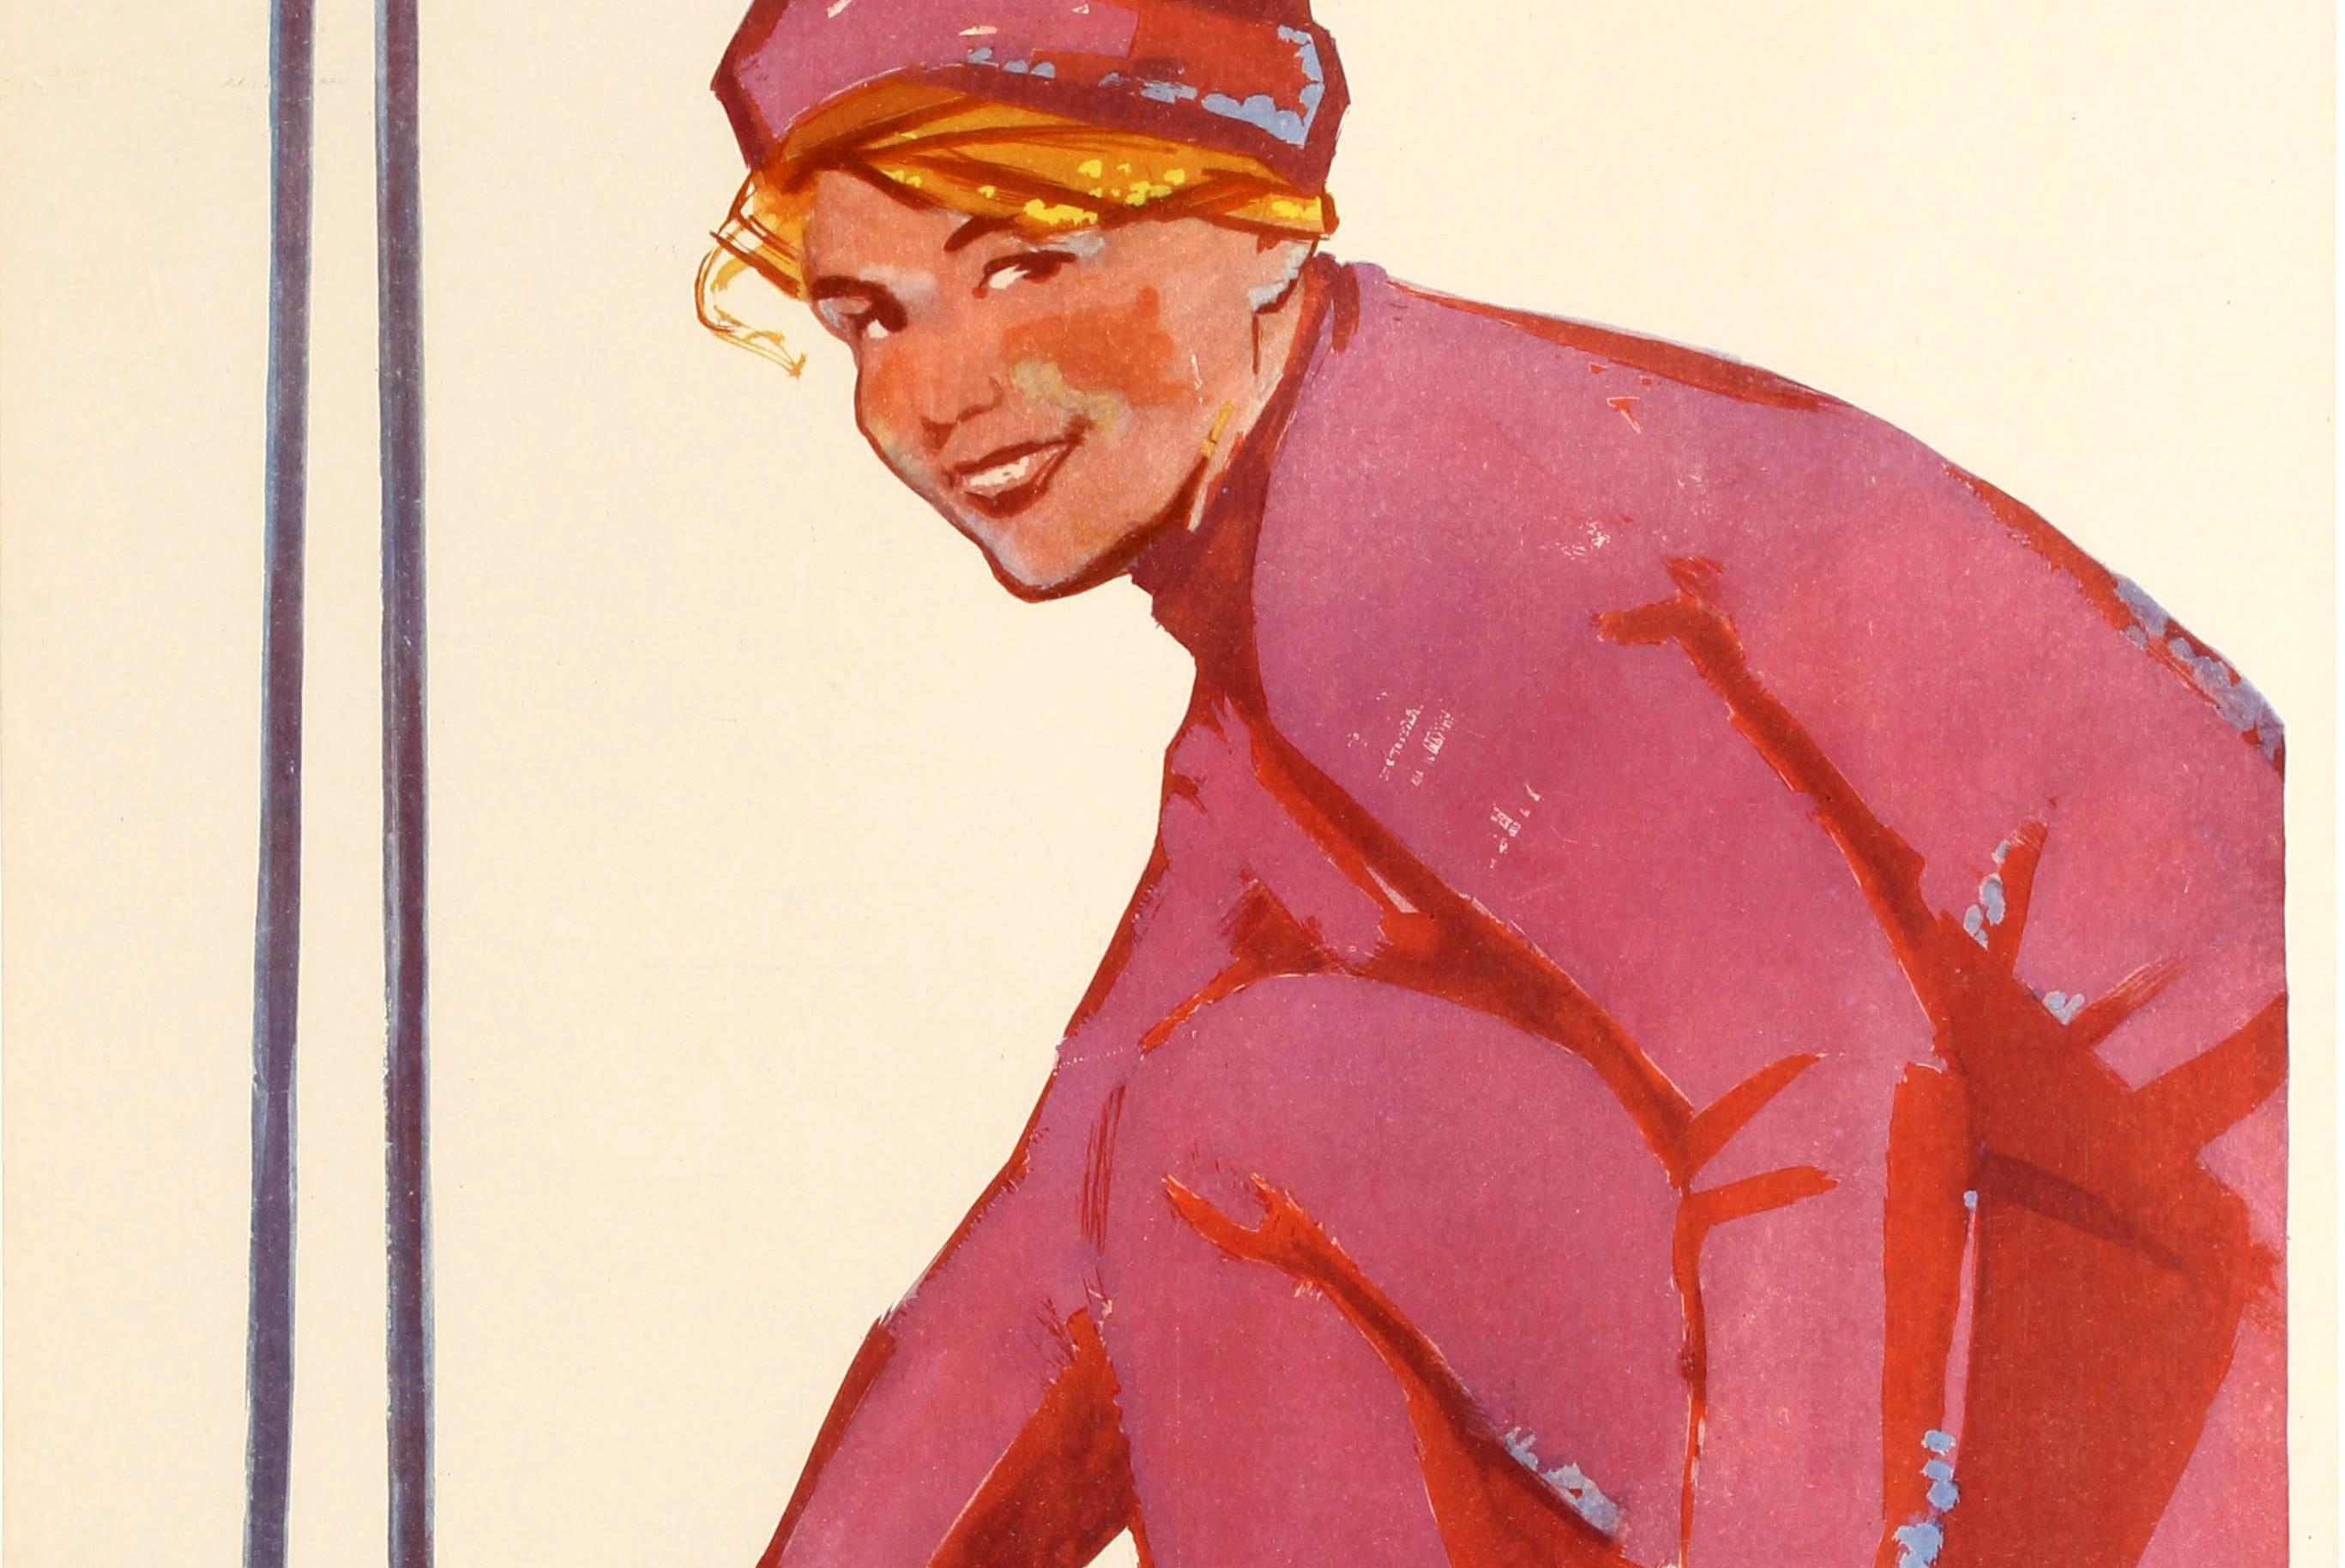 Original Vintage Soviet Winter Sport Skiing Poster - The Ski Track Is Calling! - White Print by A. Dobrov